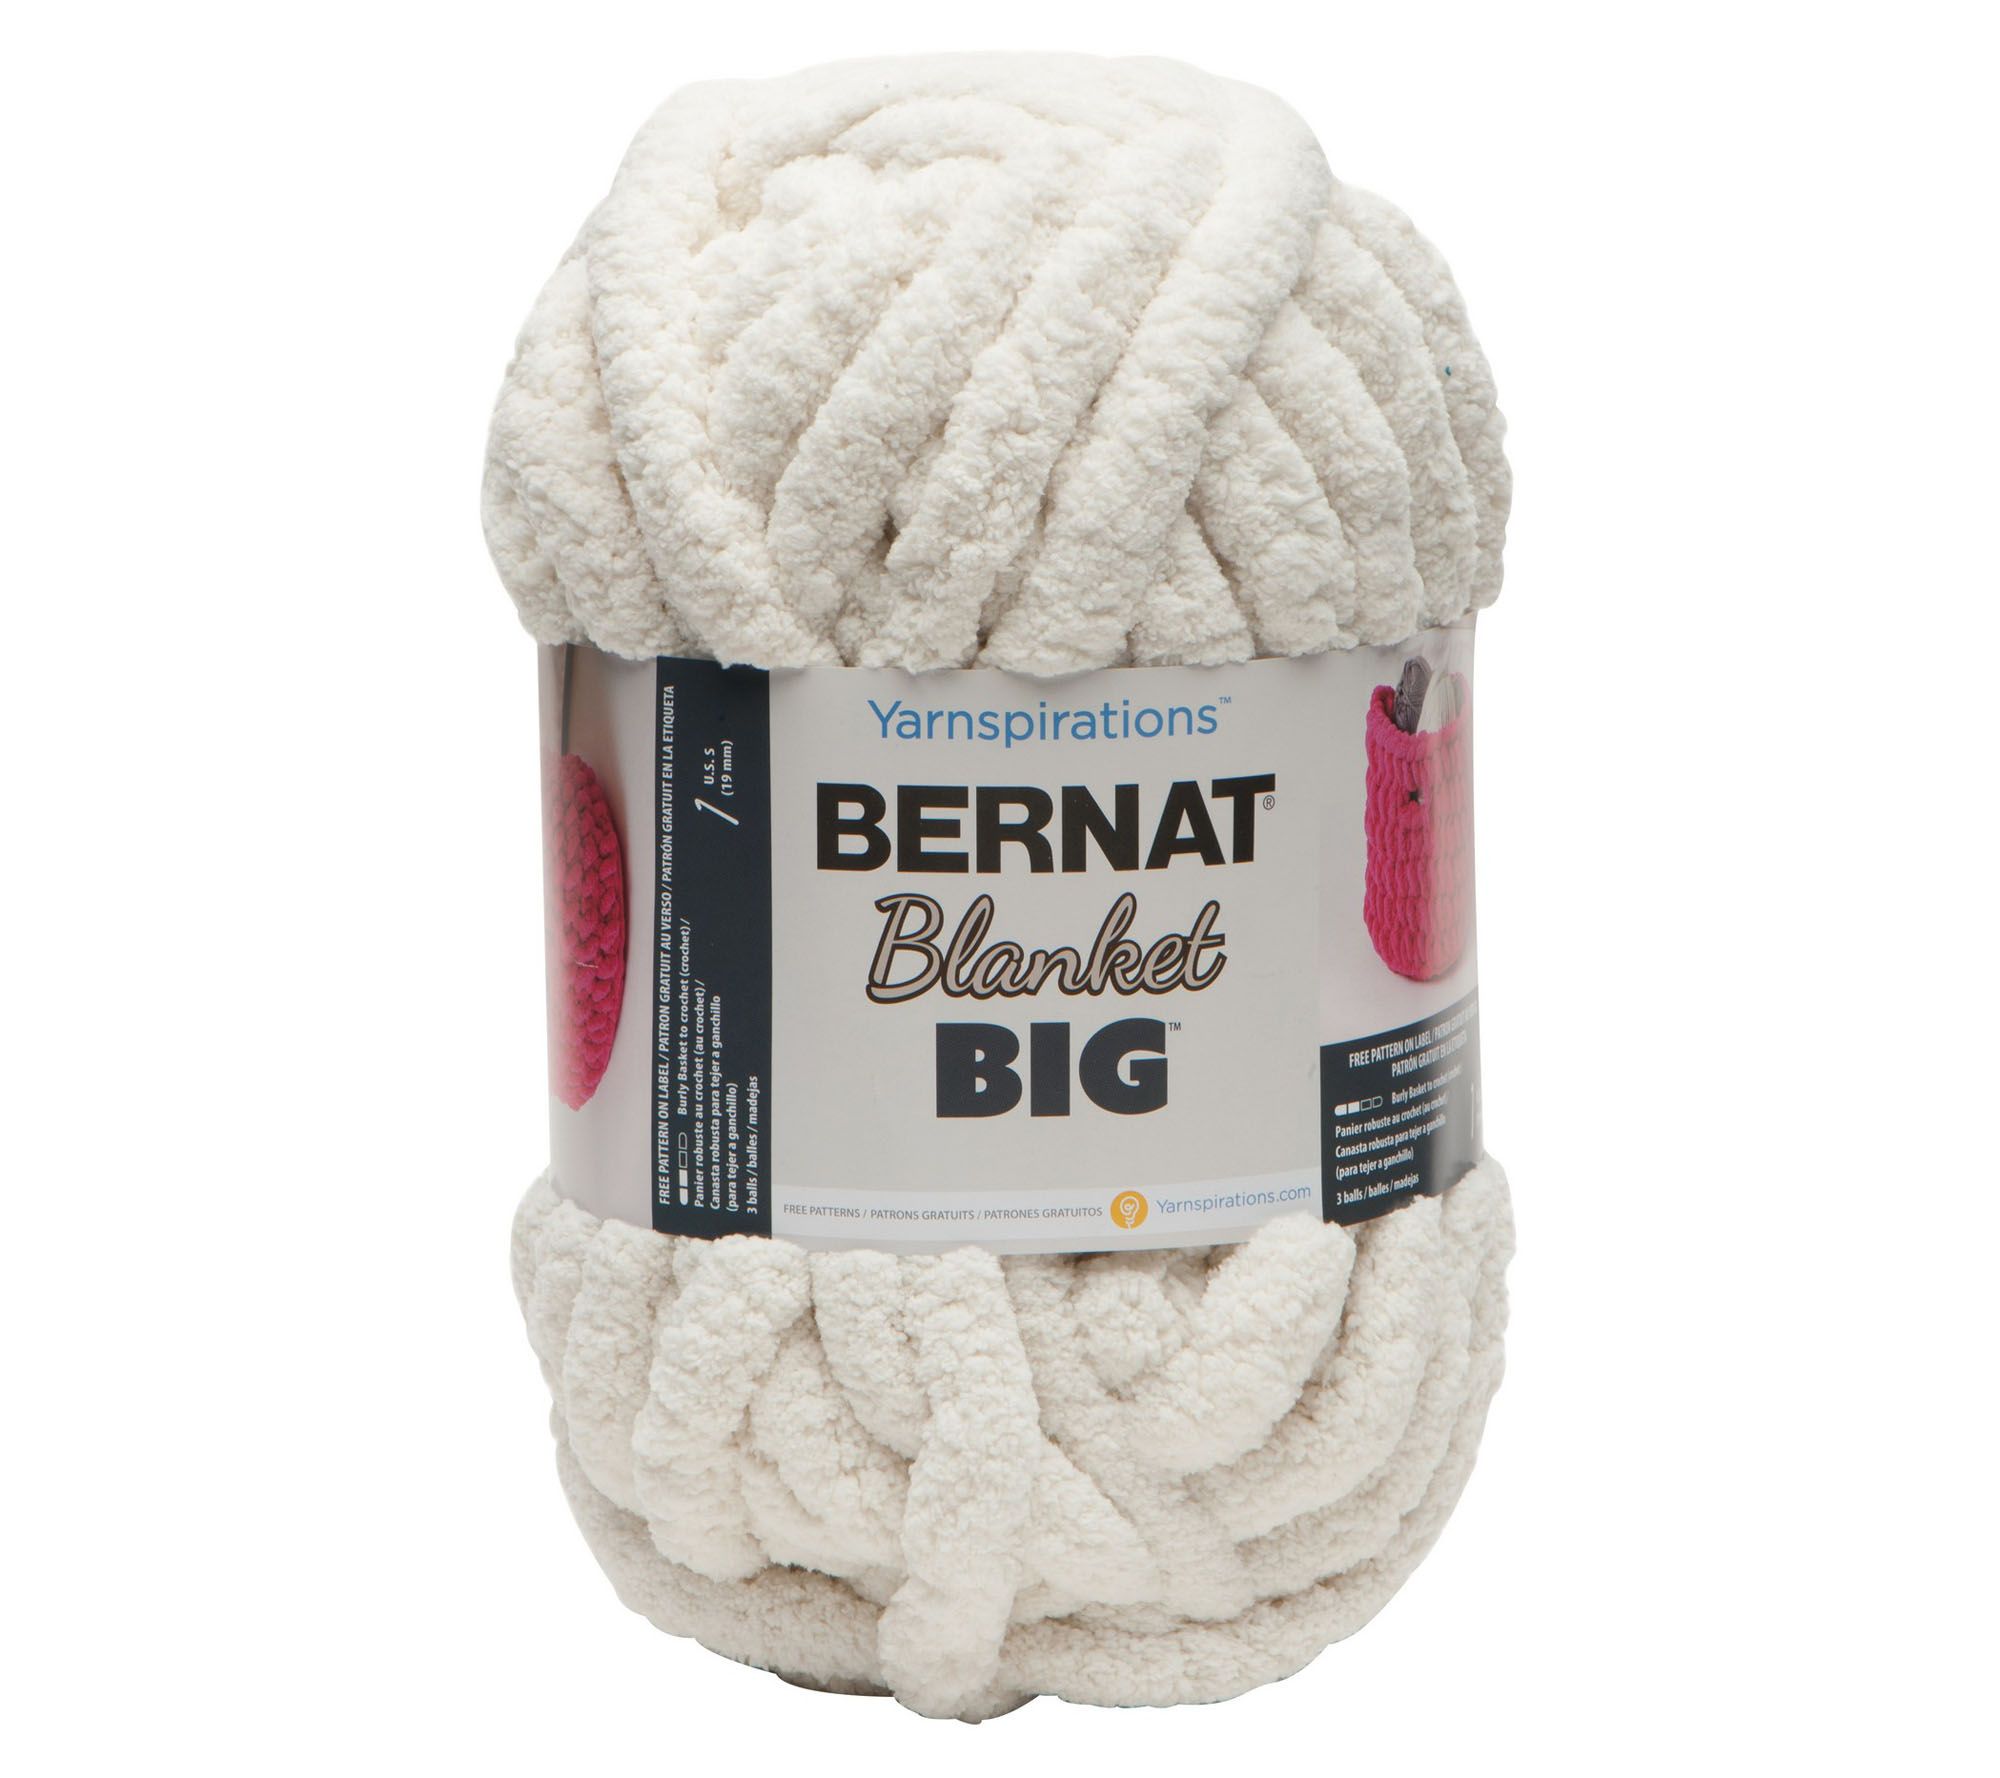 Bernat Blanket Extra Yarn-Vintage White, 1 count - Foods Co.